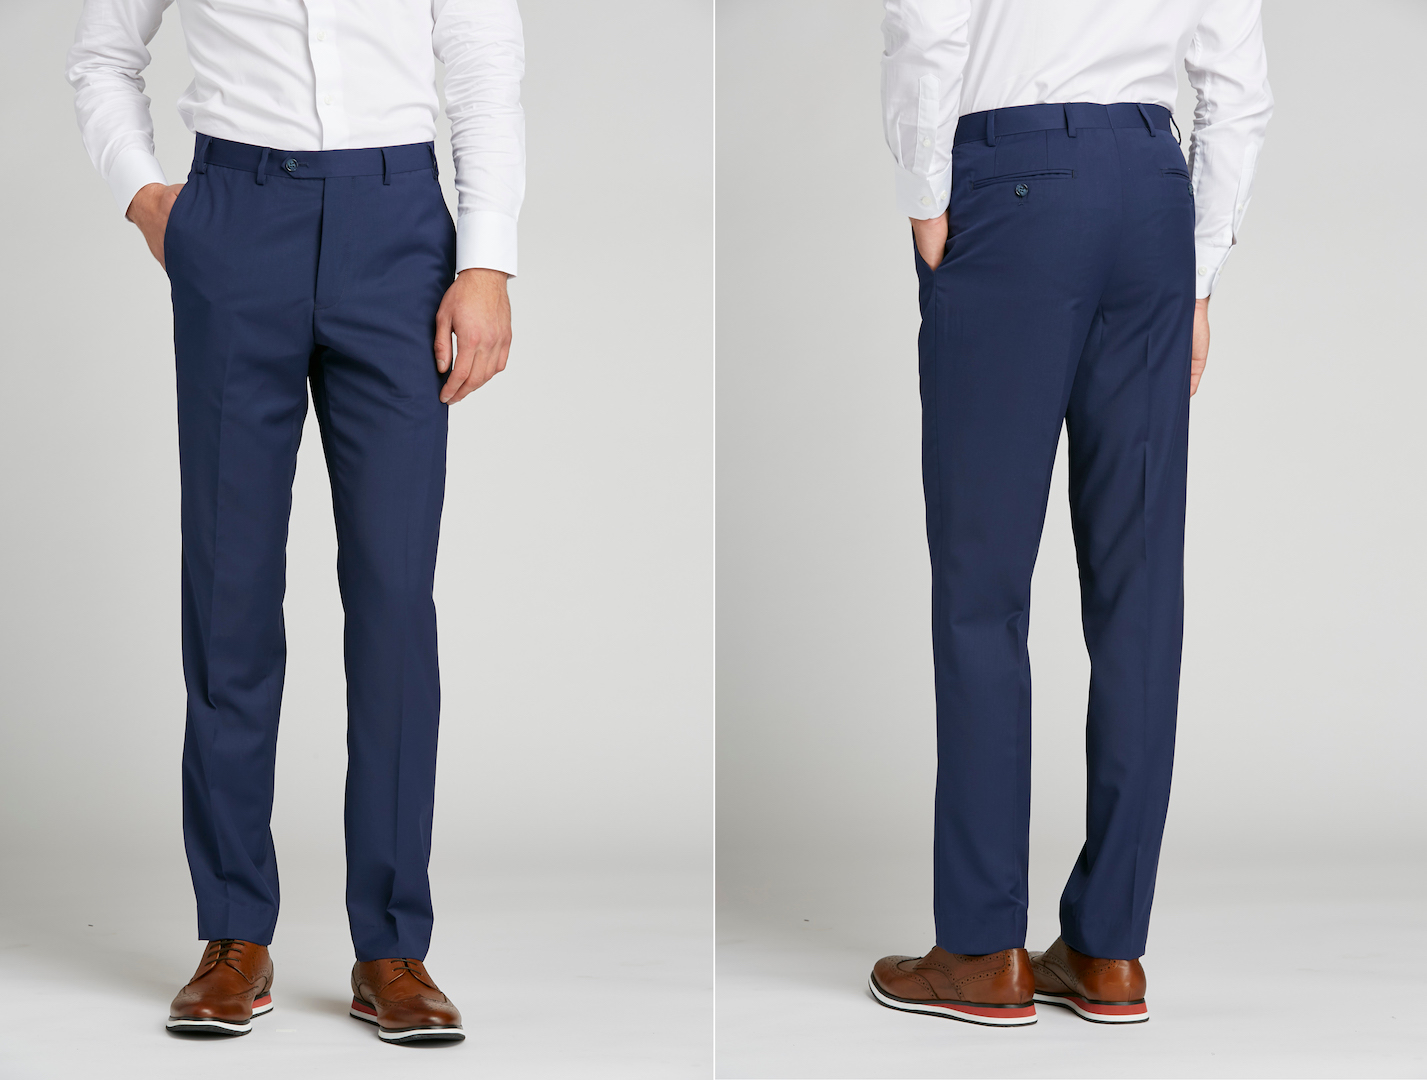 Suit Pant Length How Long Should Trousers Be